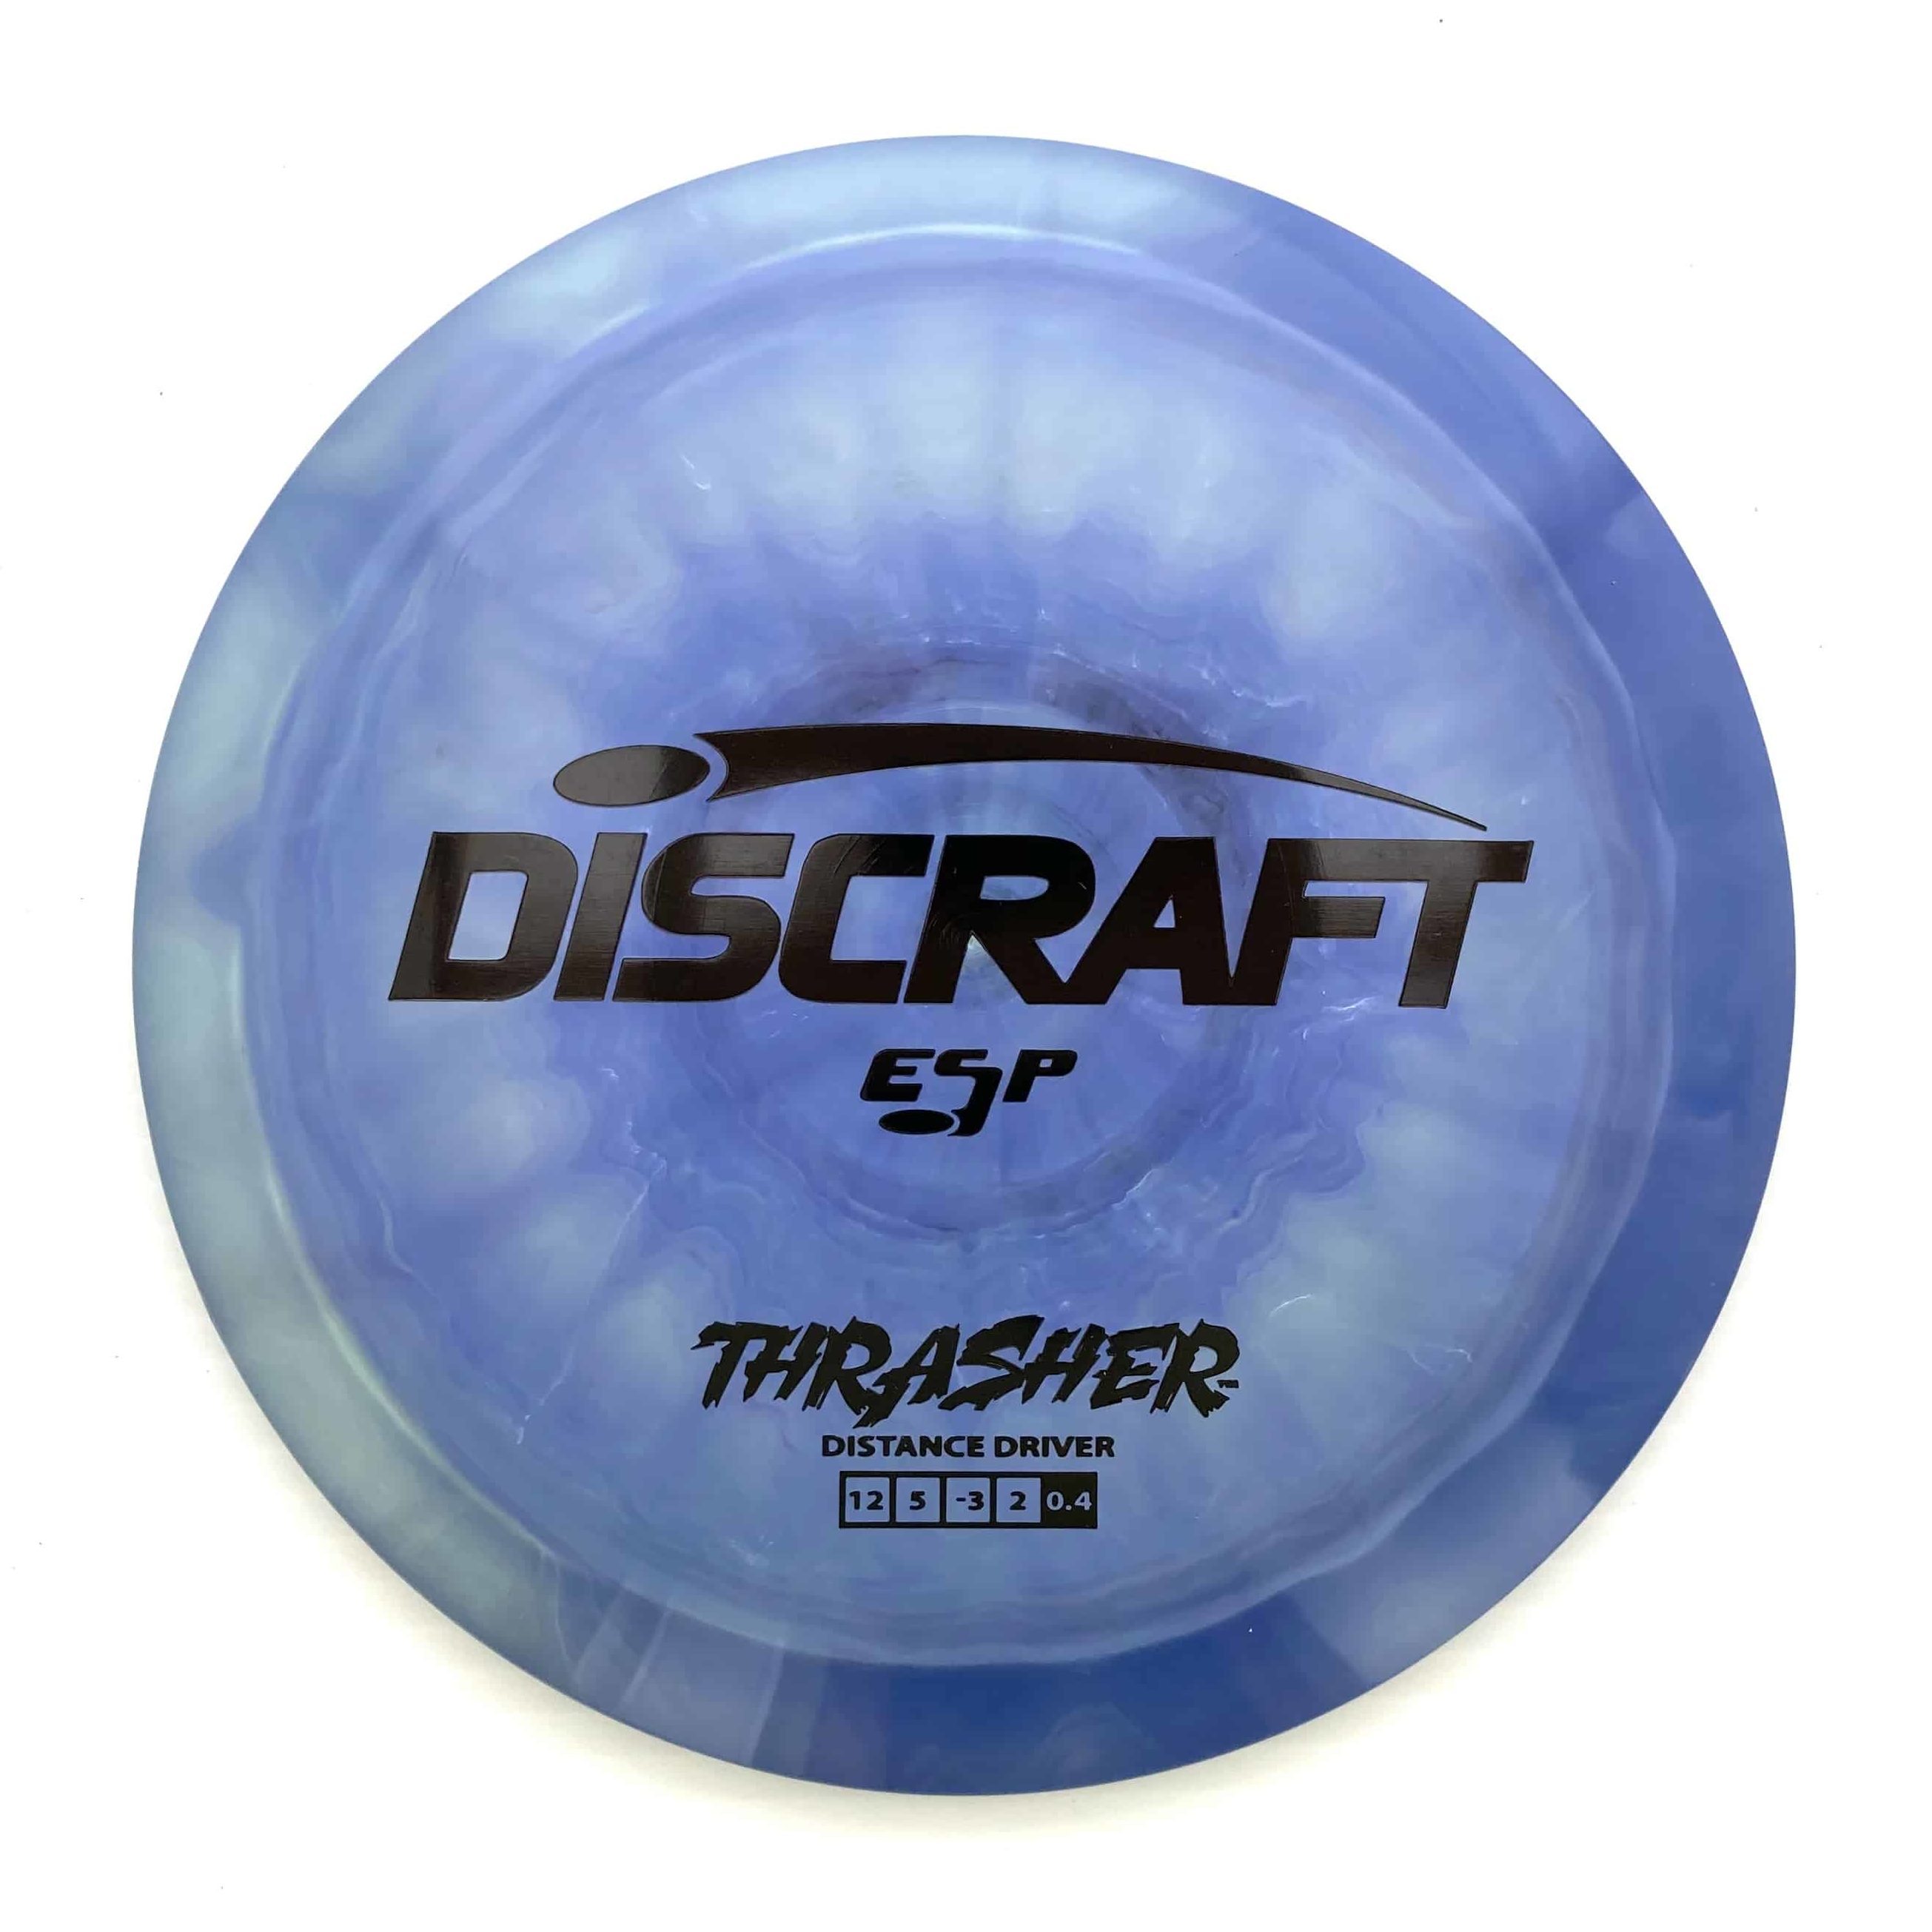 Discraft's ESP Thrasher